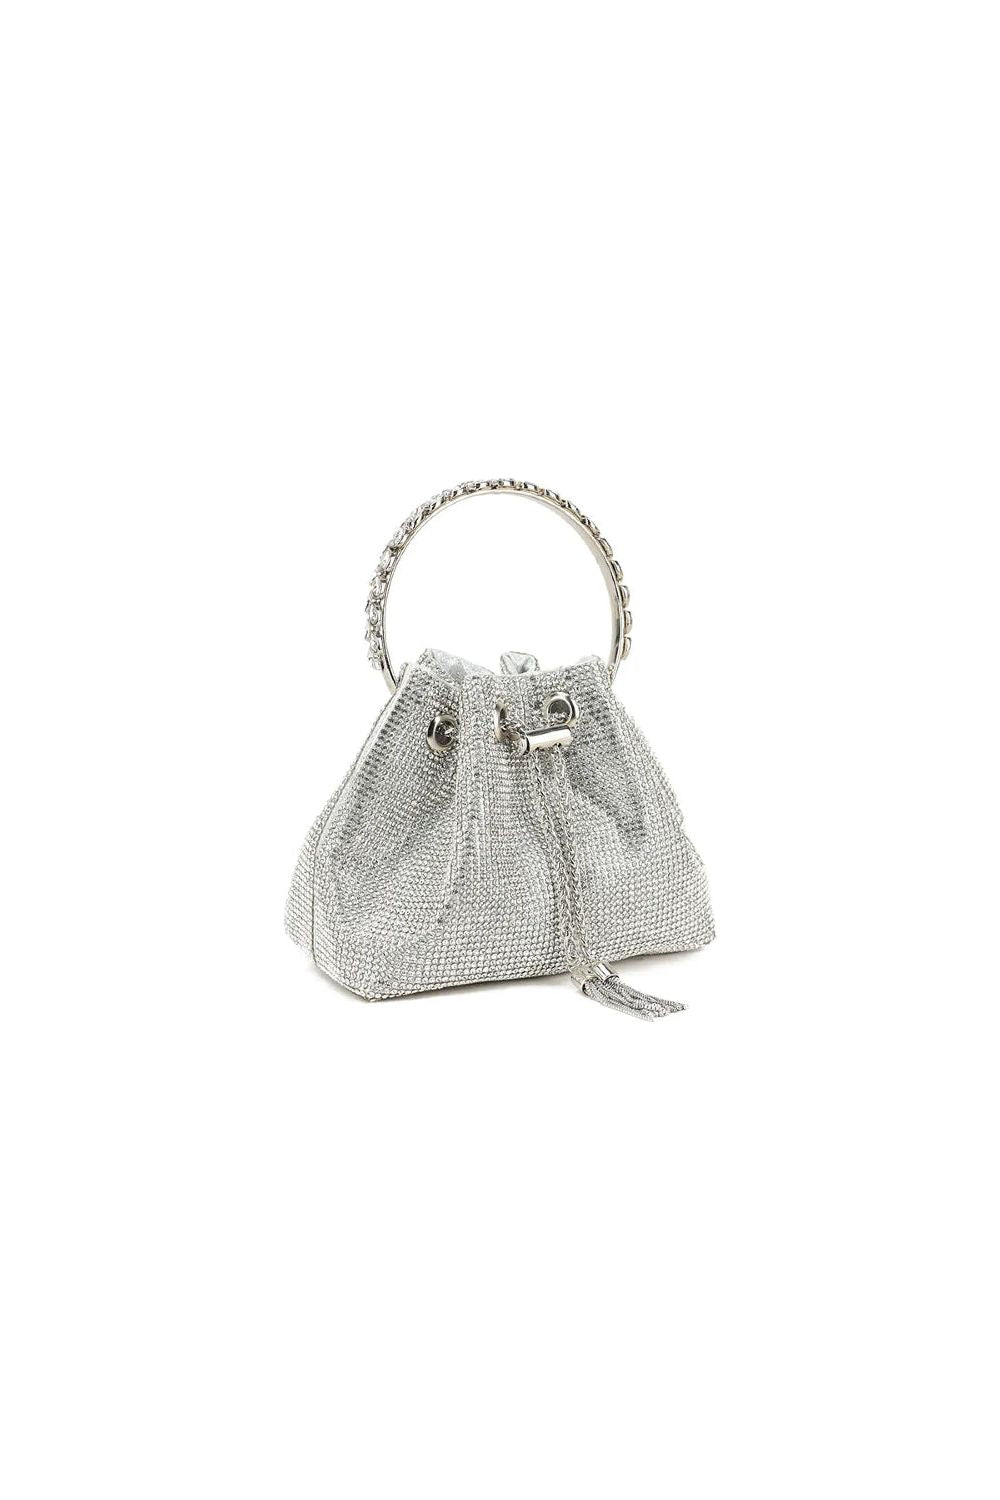 Silver Crystal Mesh Top Handle Evening Bag ALZ2920